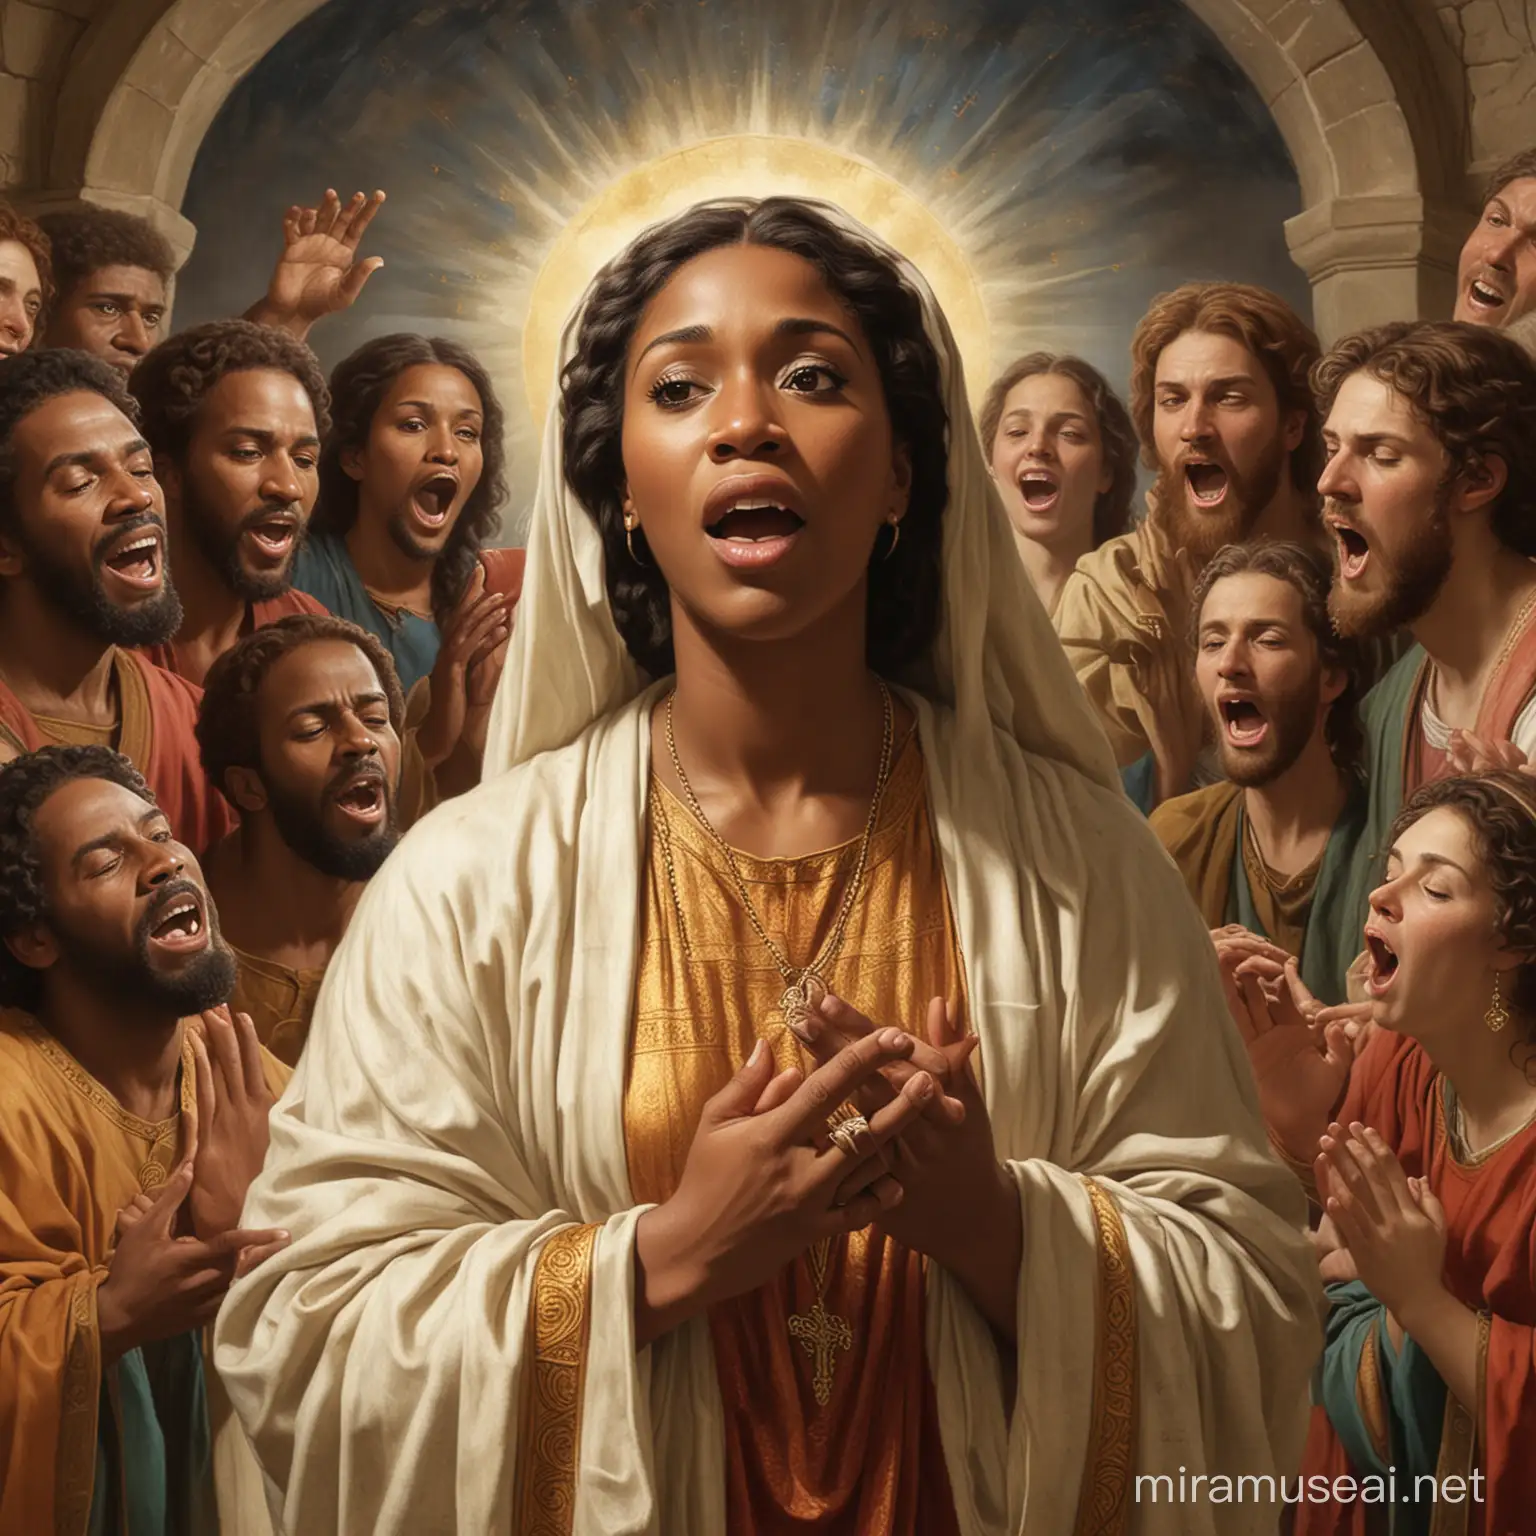 gospel singers shown in biblical art